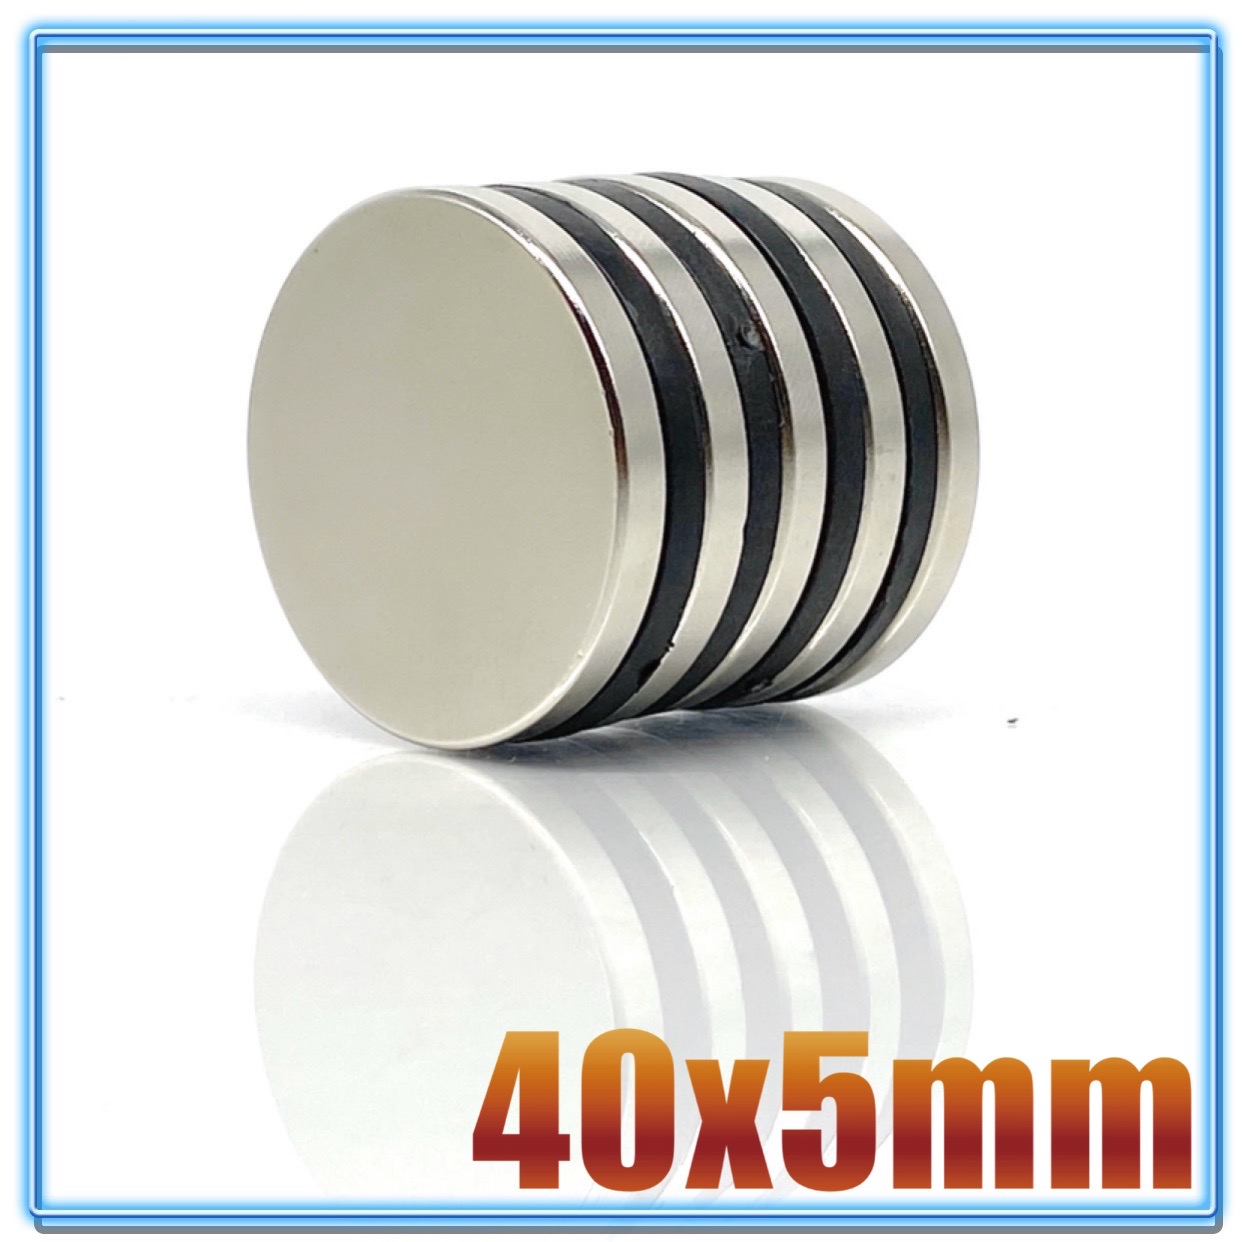 1pcs A4 297x210mm Magnetic Sheet Thick 0.5/1/1.5/2/3mm Flexible